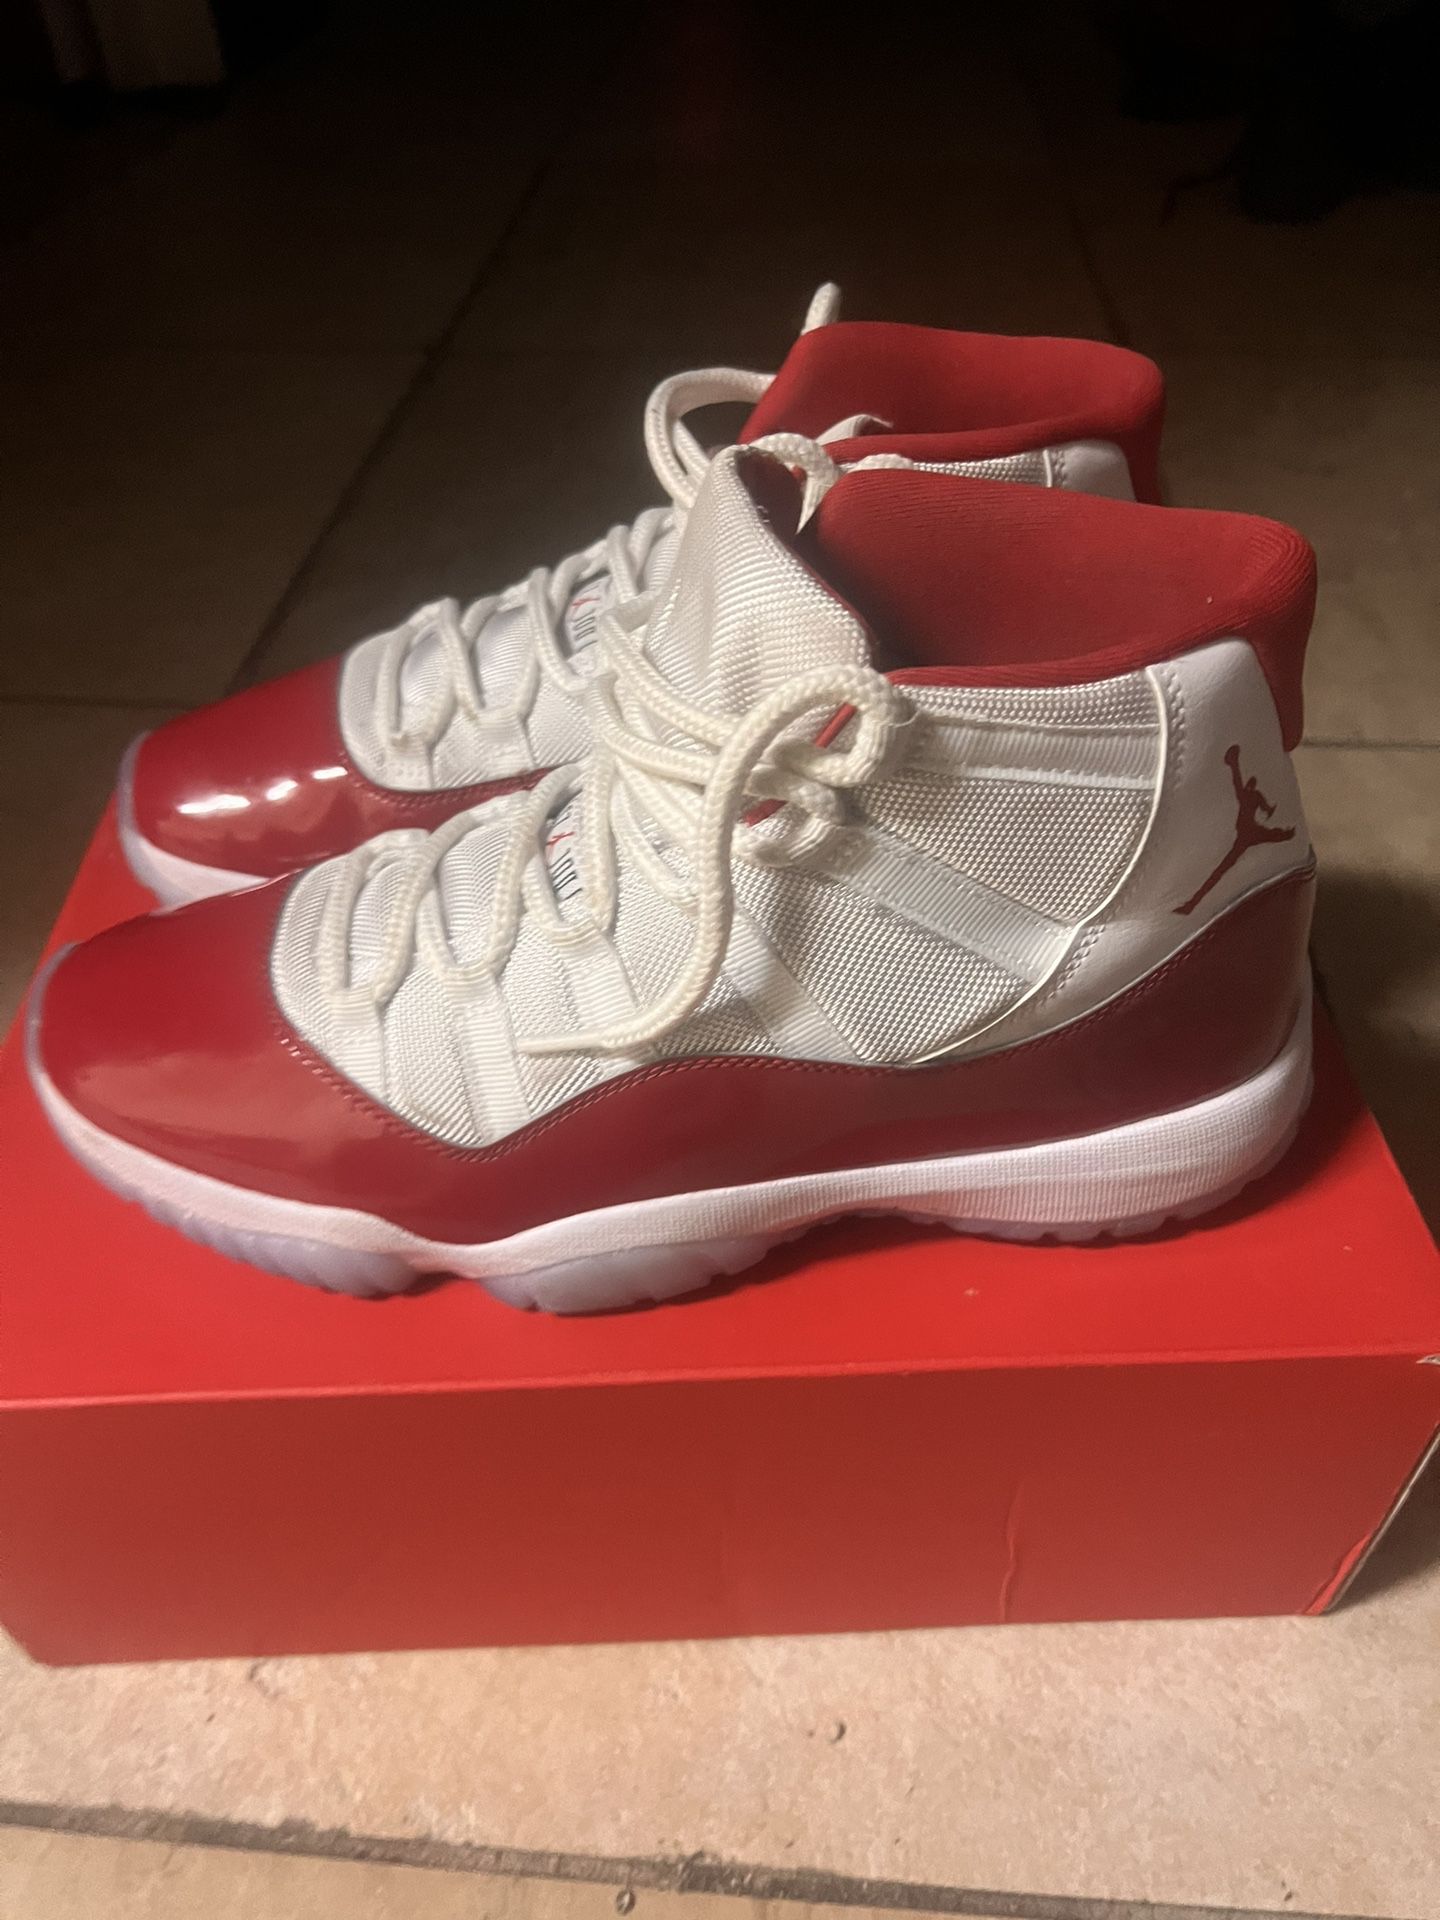 Air Jordan Retro 11 “Cherry Red” 🍒 Men’s Size 10.5